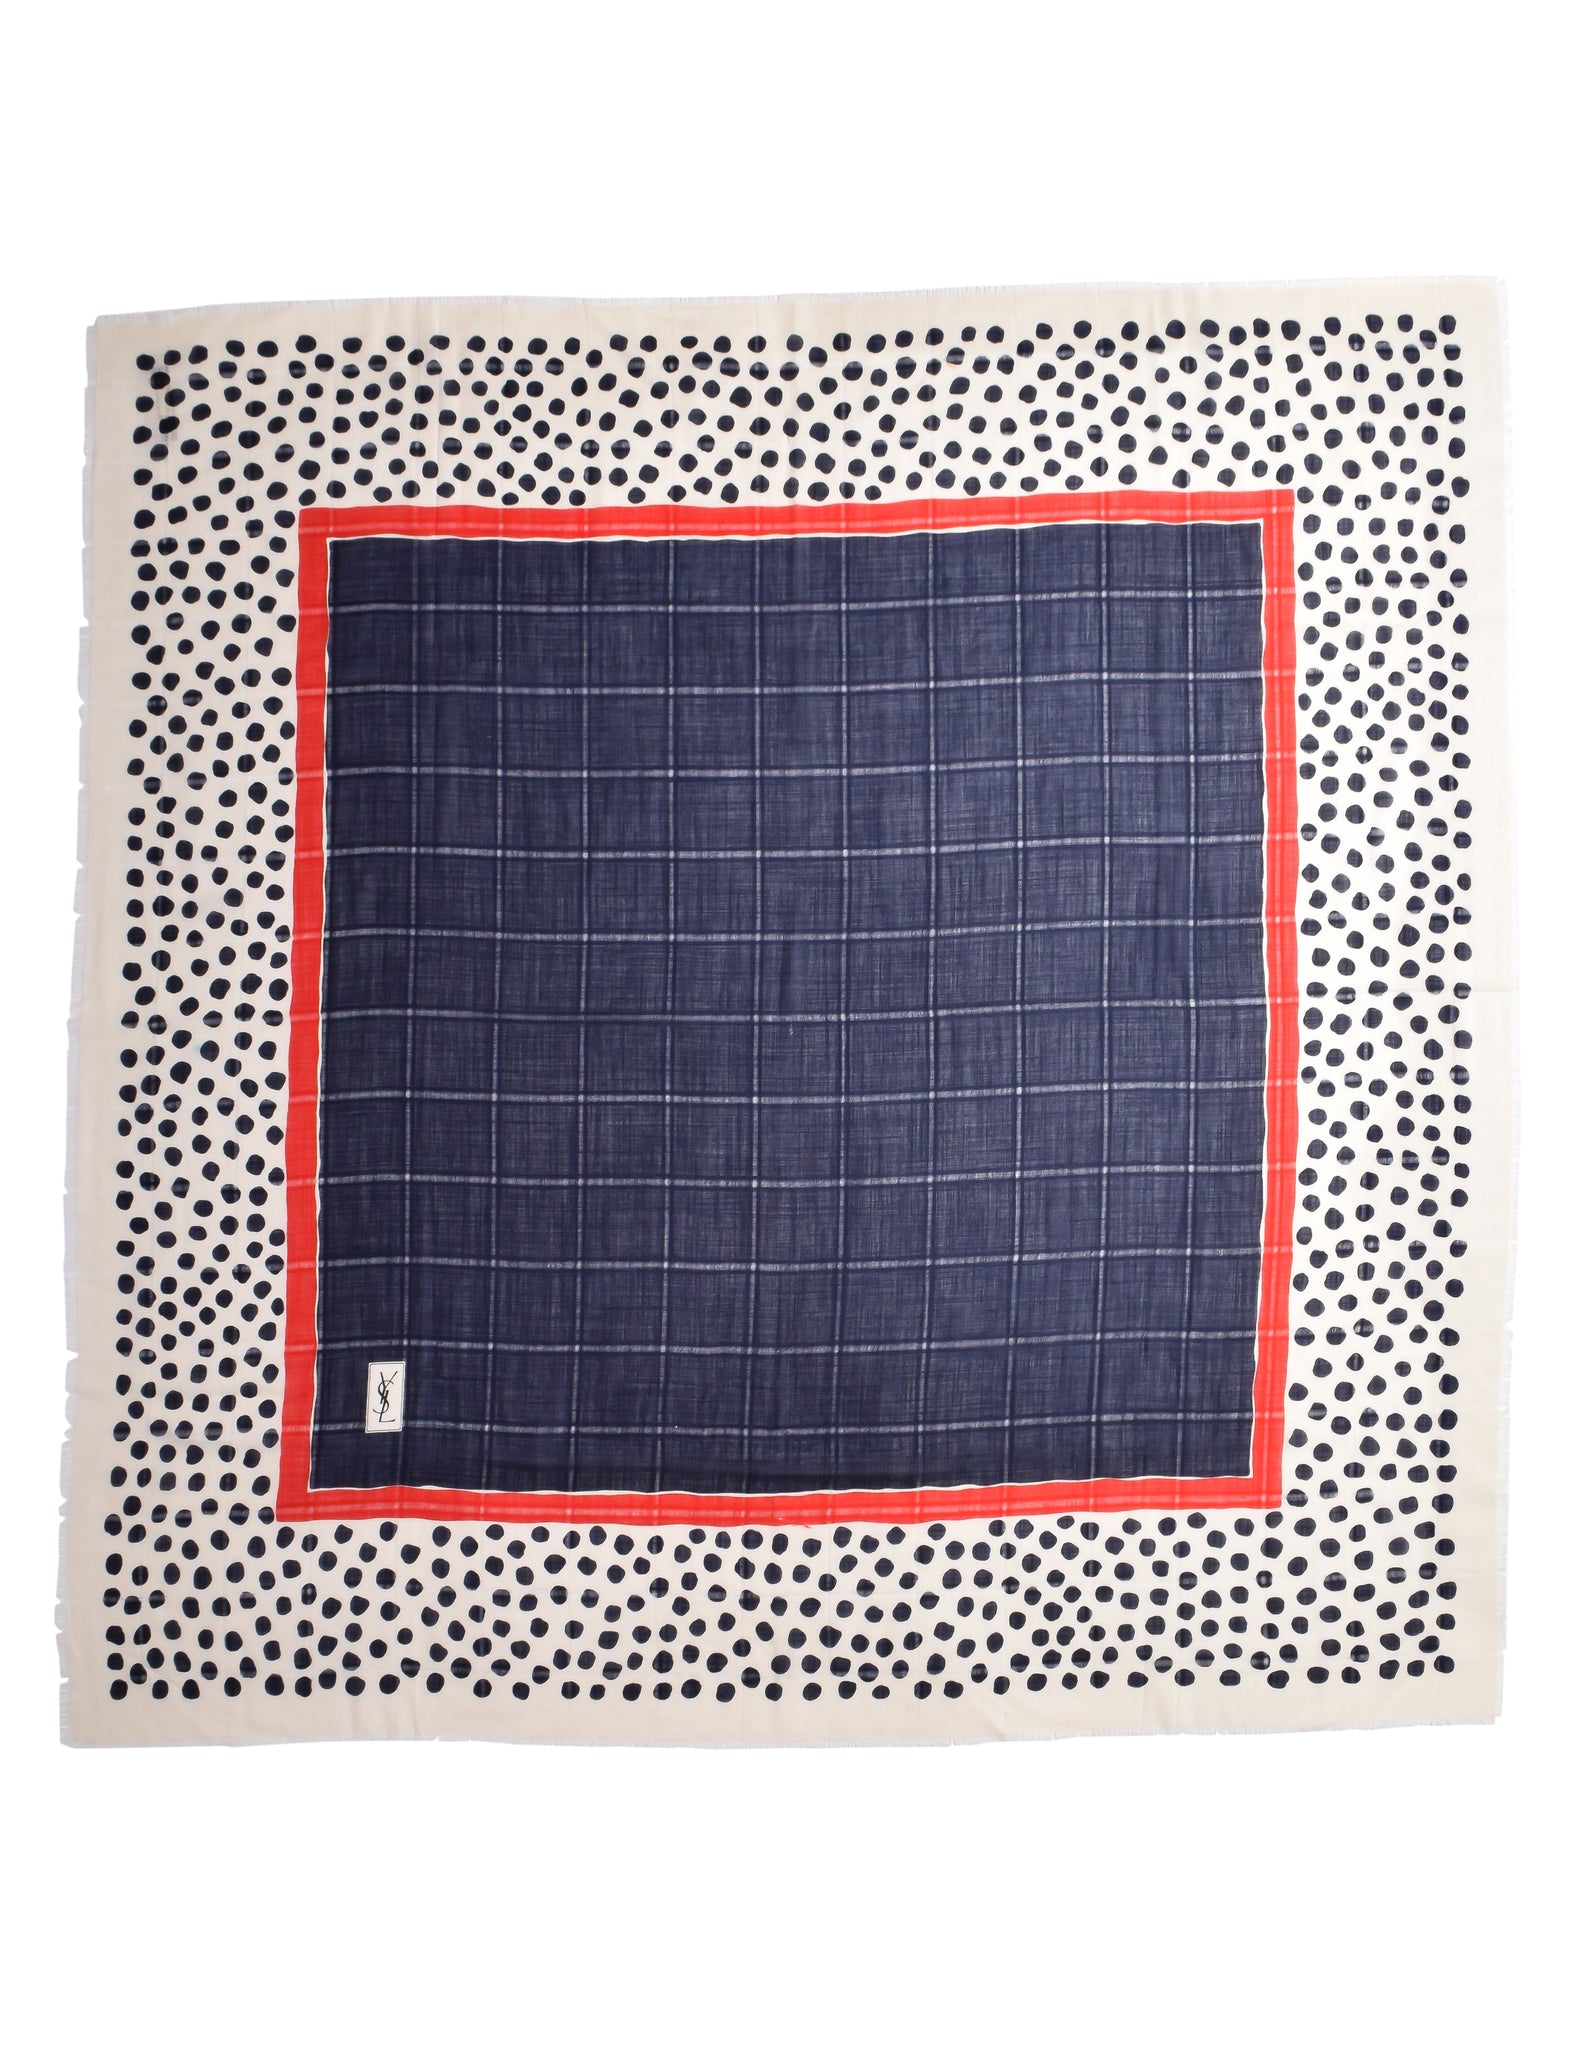 Yves Saint Laurent Vintage 1970s Navy Blue Red White Dot Woven Silk Wool Oversized Scarf